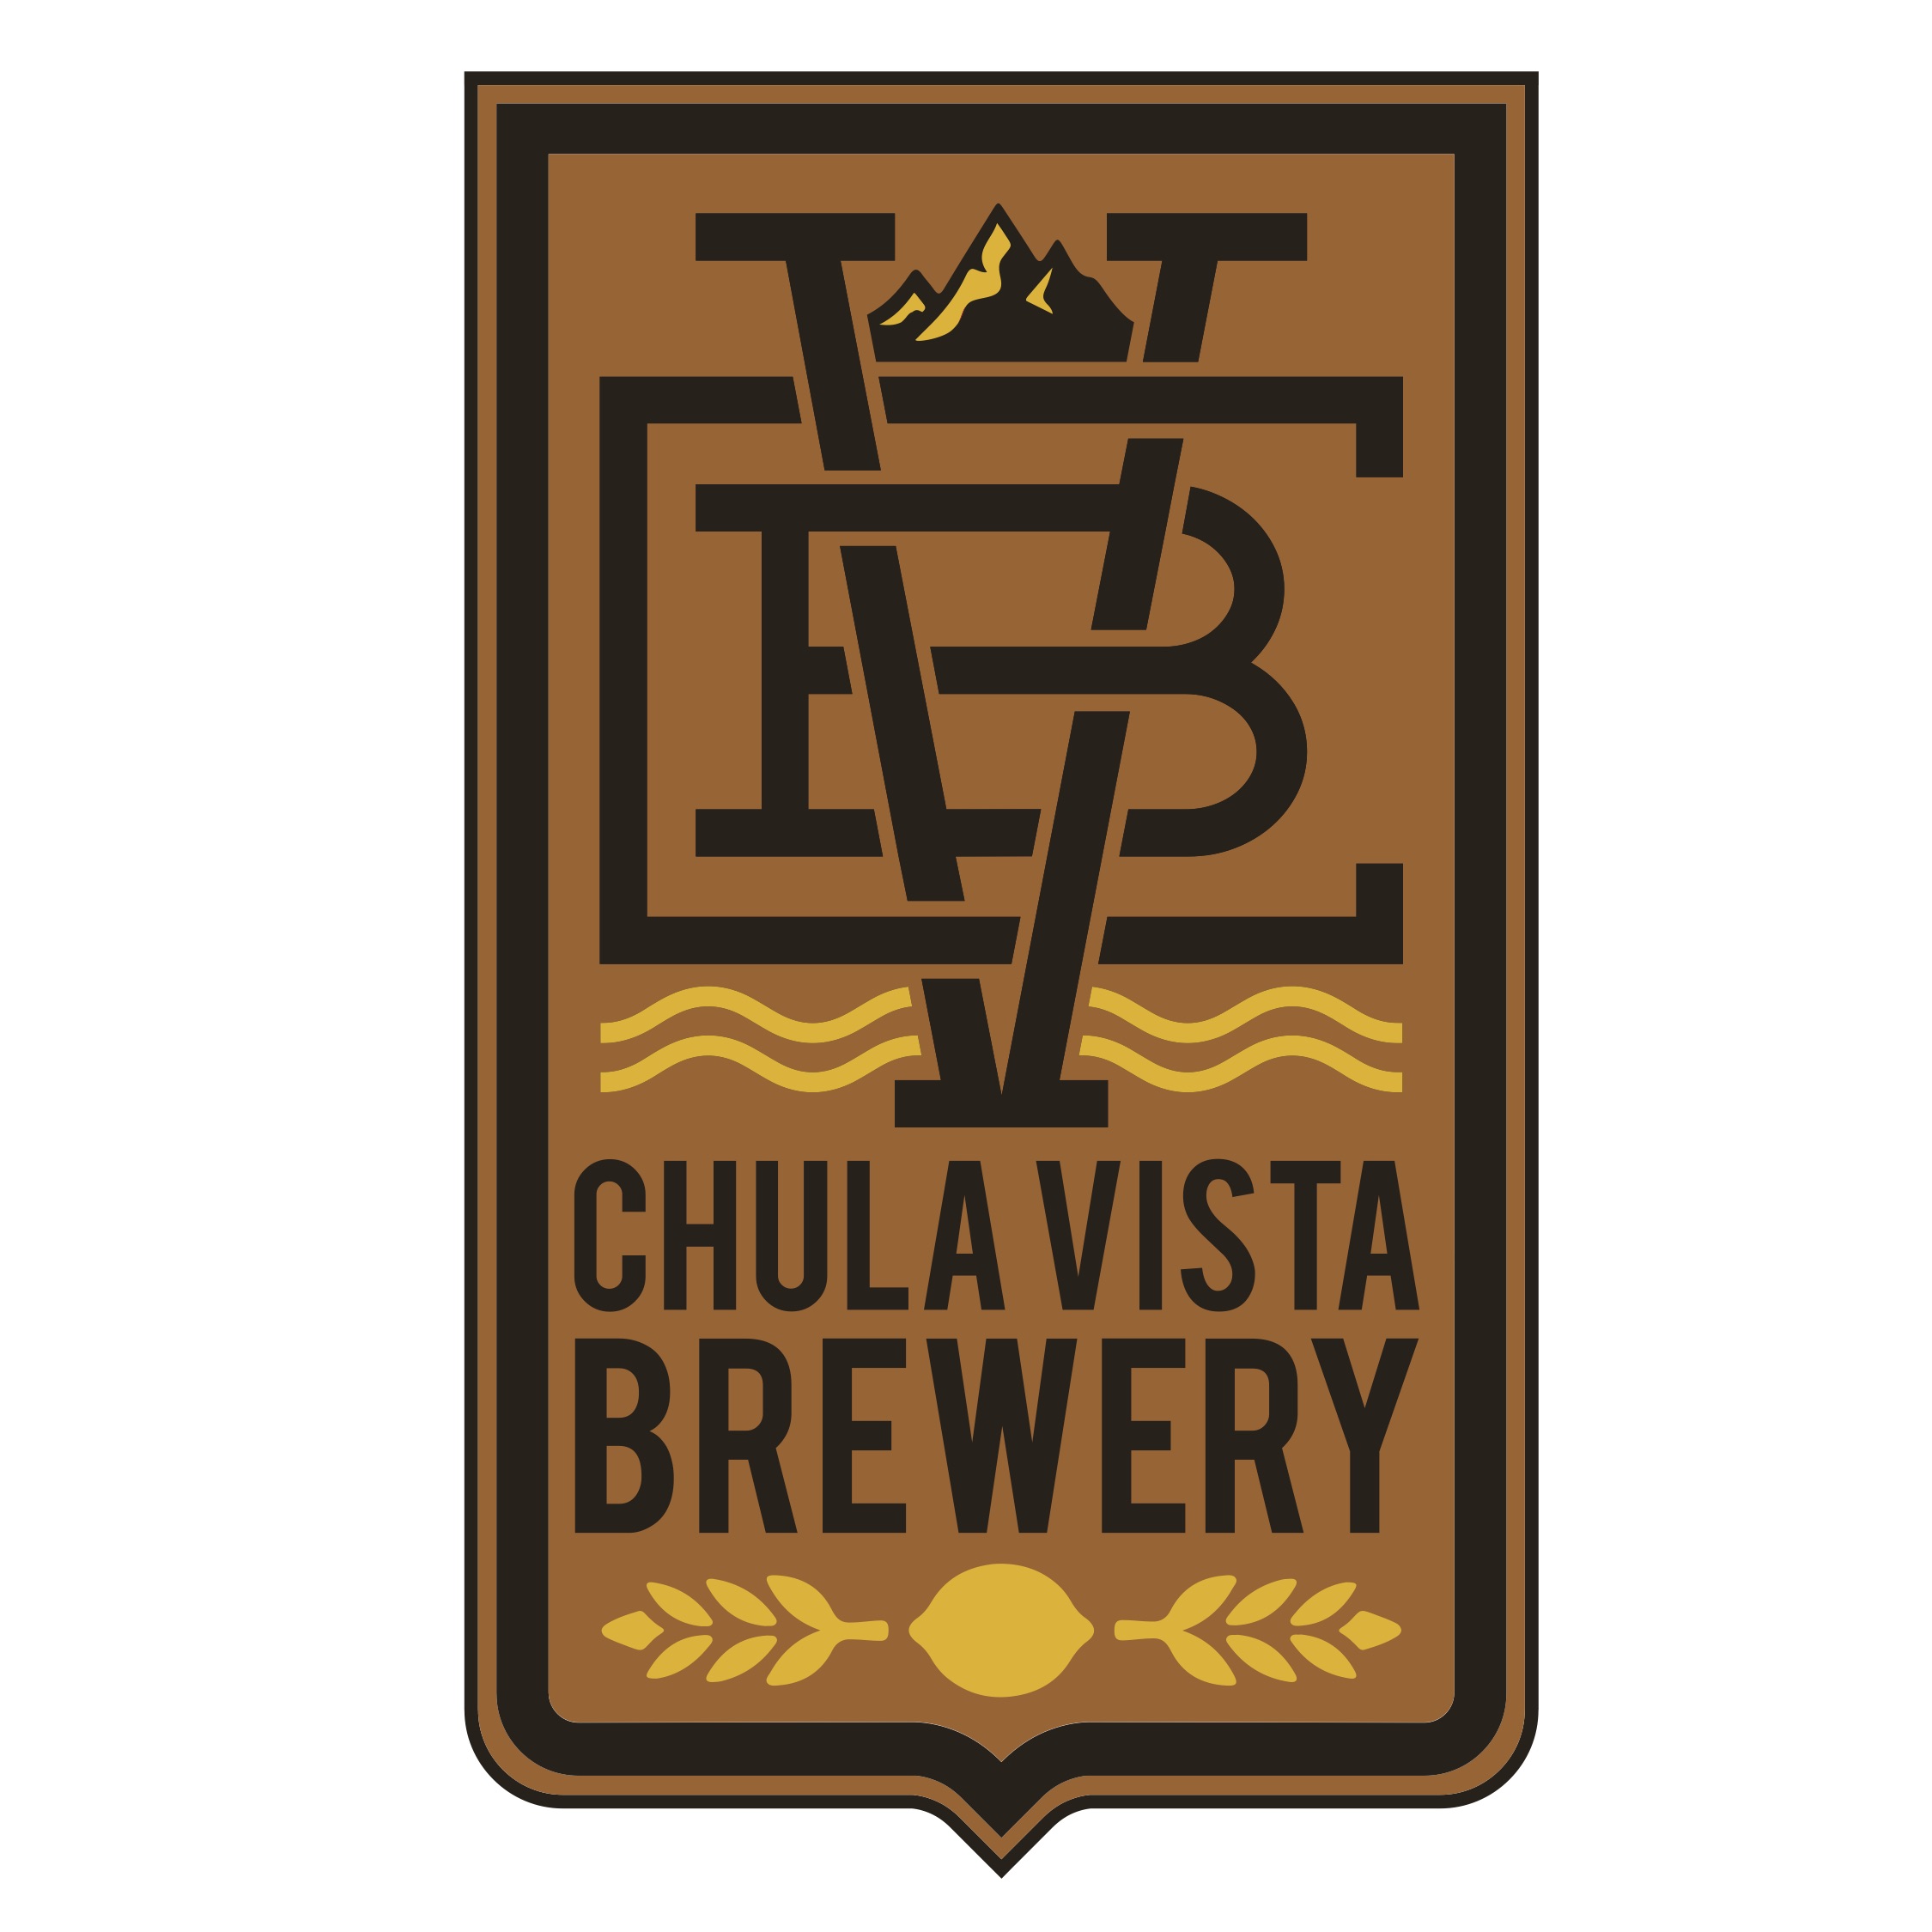 Chula Vista Brewery